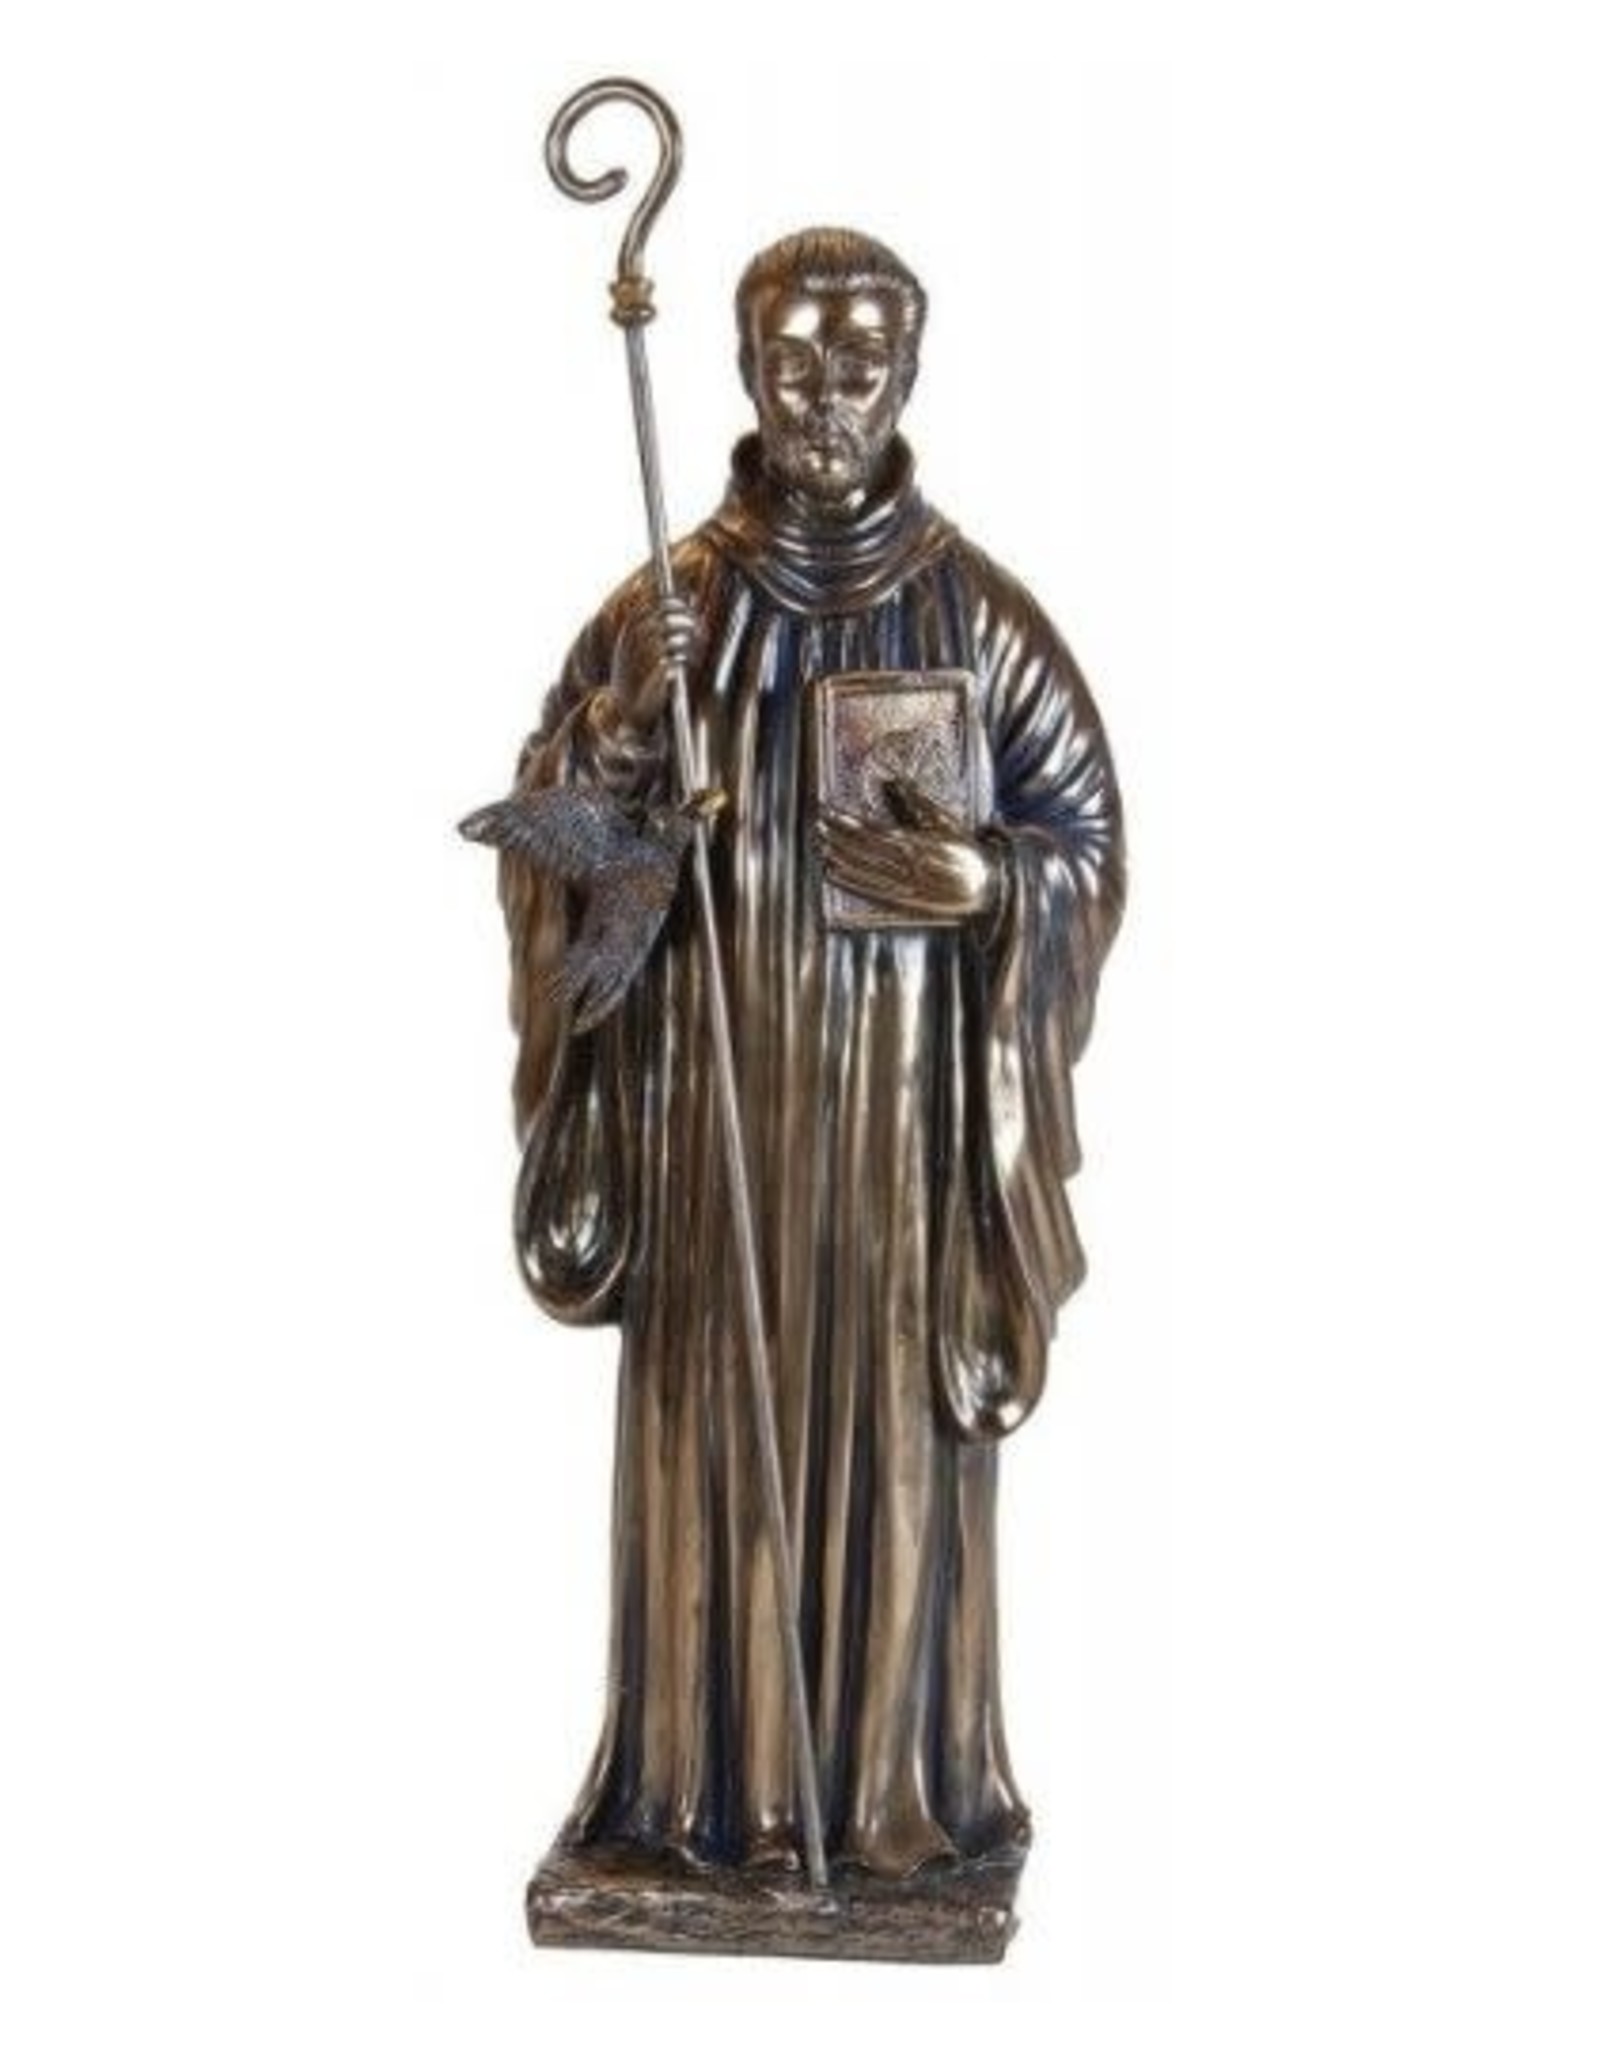 Pacific Trading Saint Benedict Statue 11"